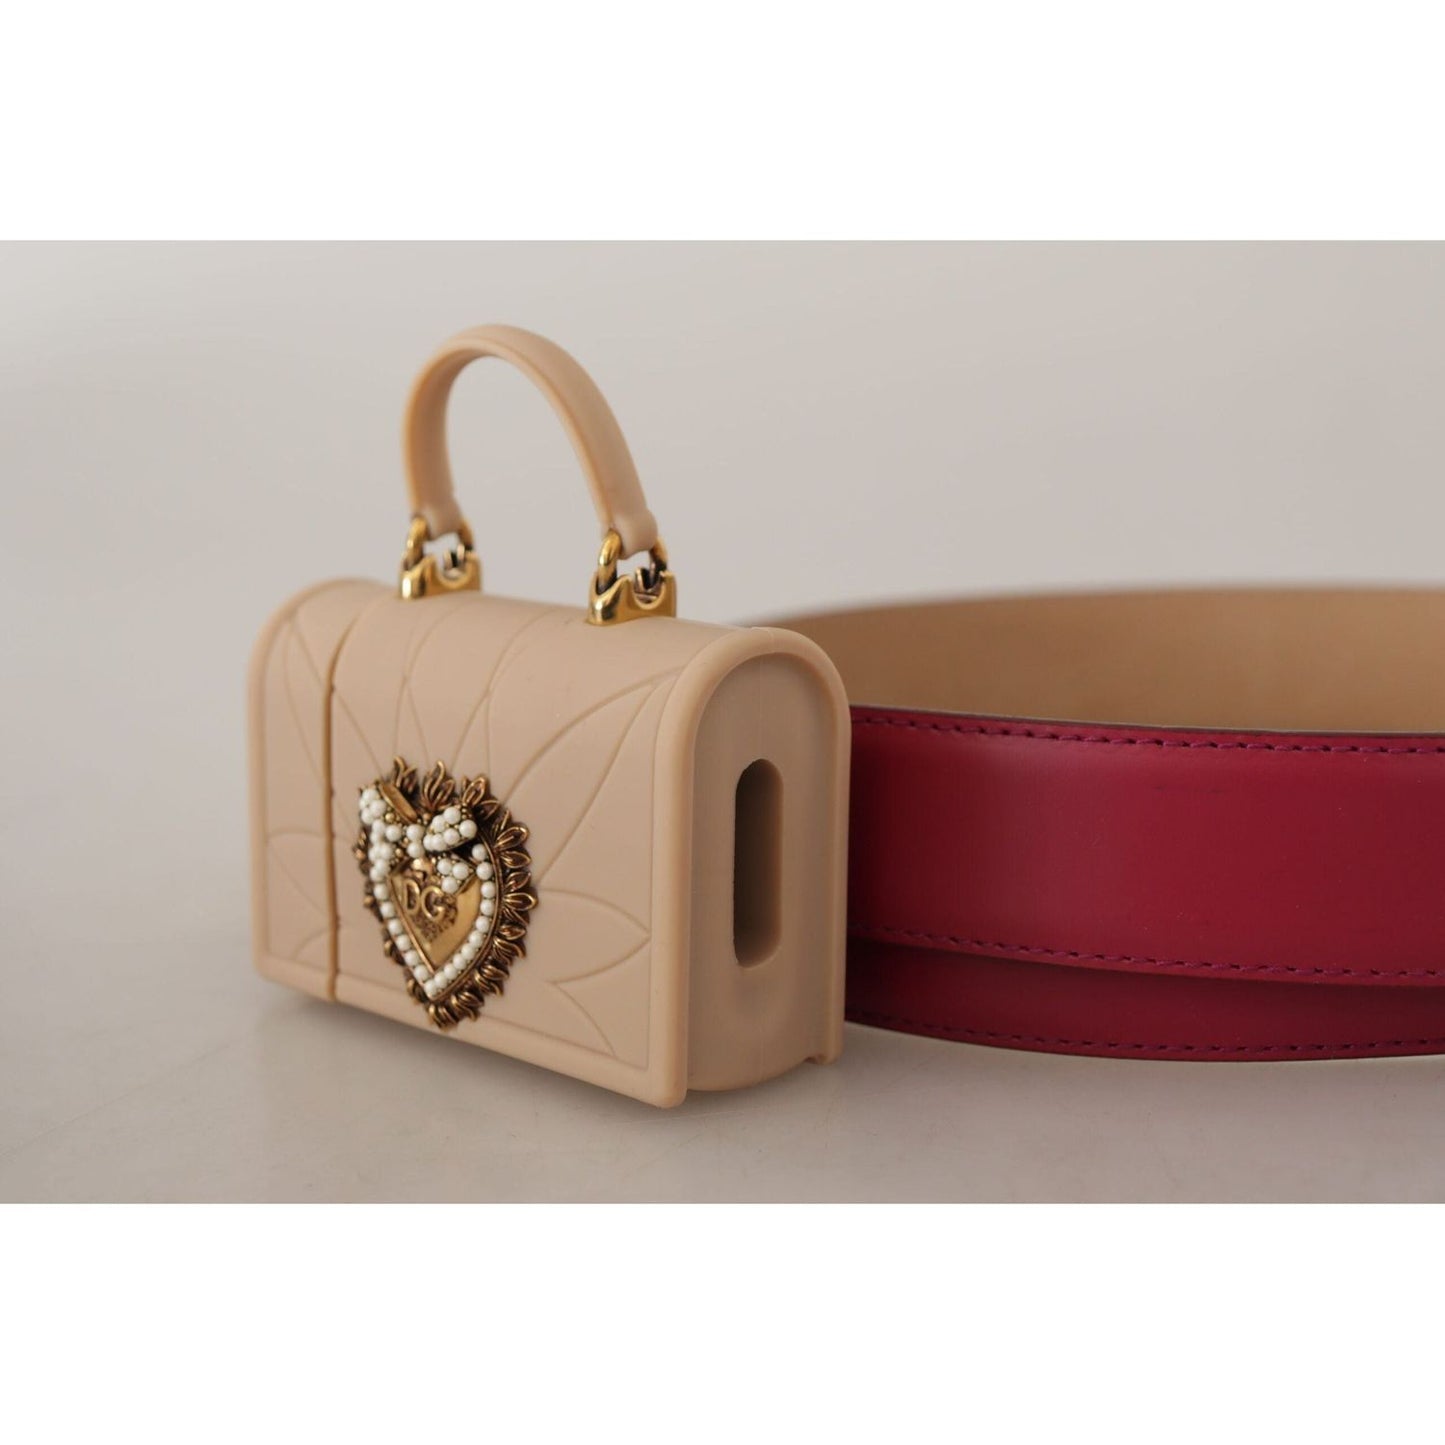 Dolce & Gabbana Elegant Pink Leather Belt with Headphone Case pink-leather-devotion-heart-micro-bag-headphones-belt